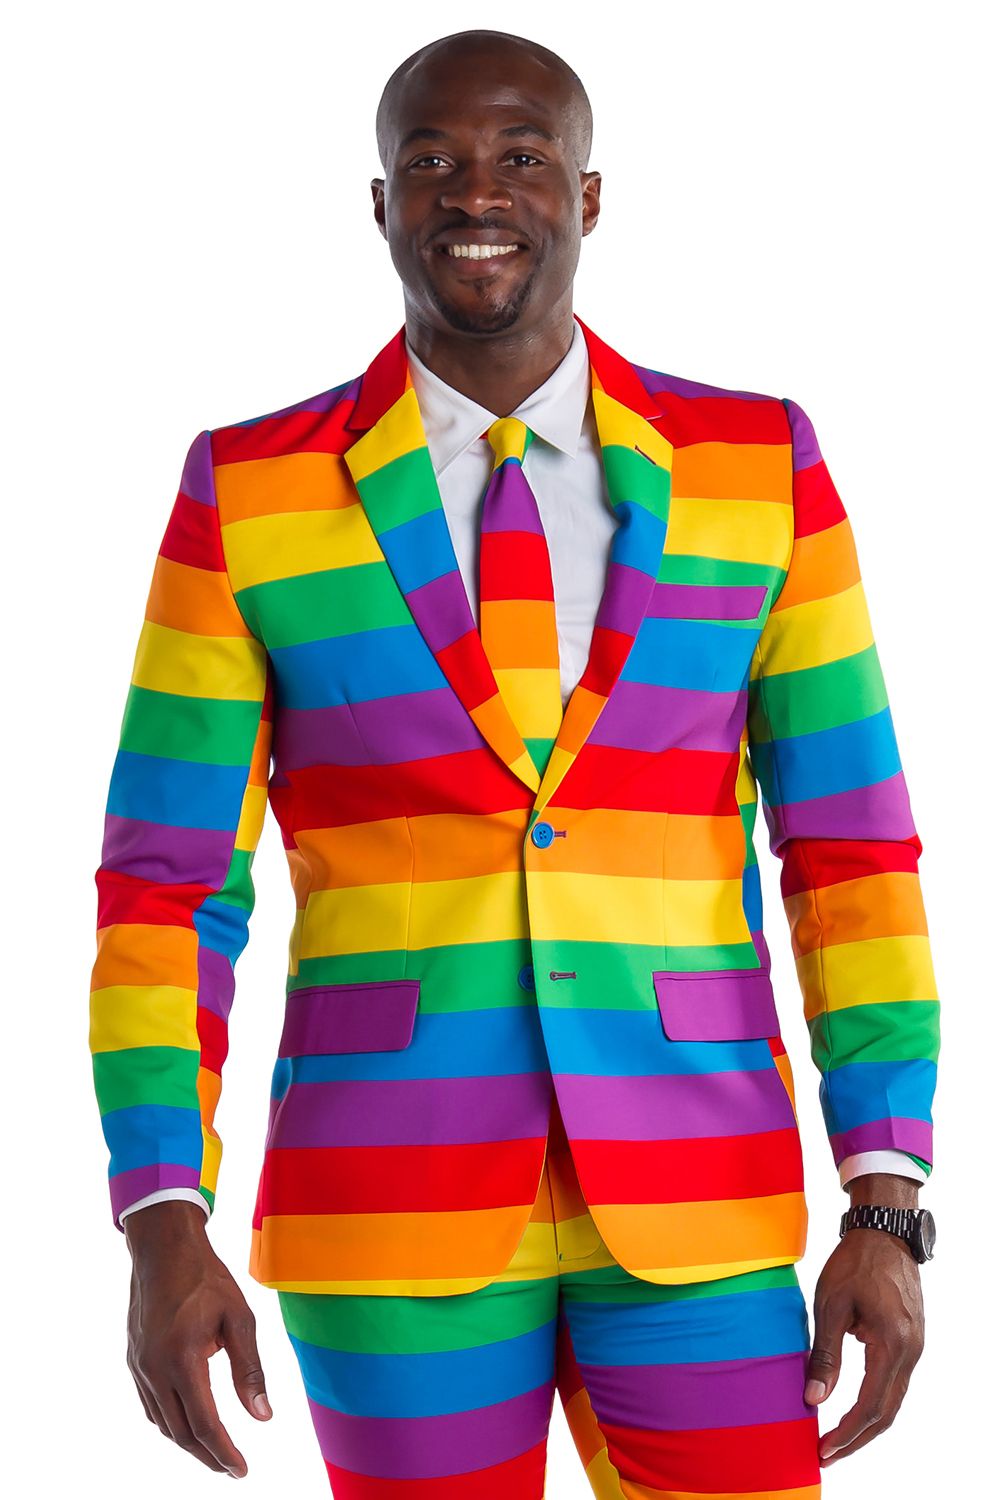 man-in-rainbow-suit-blank-template-imgflip